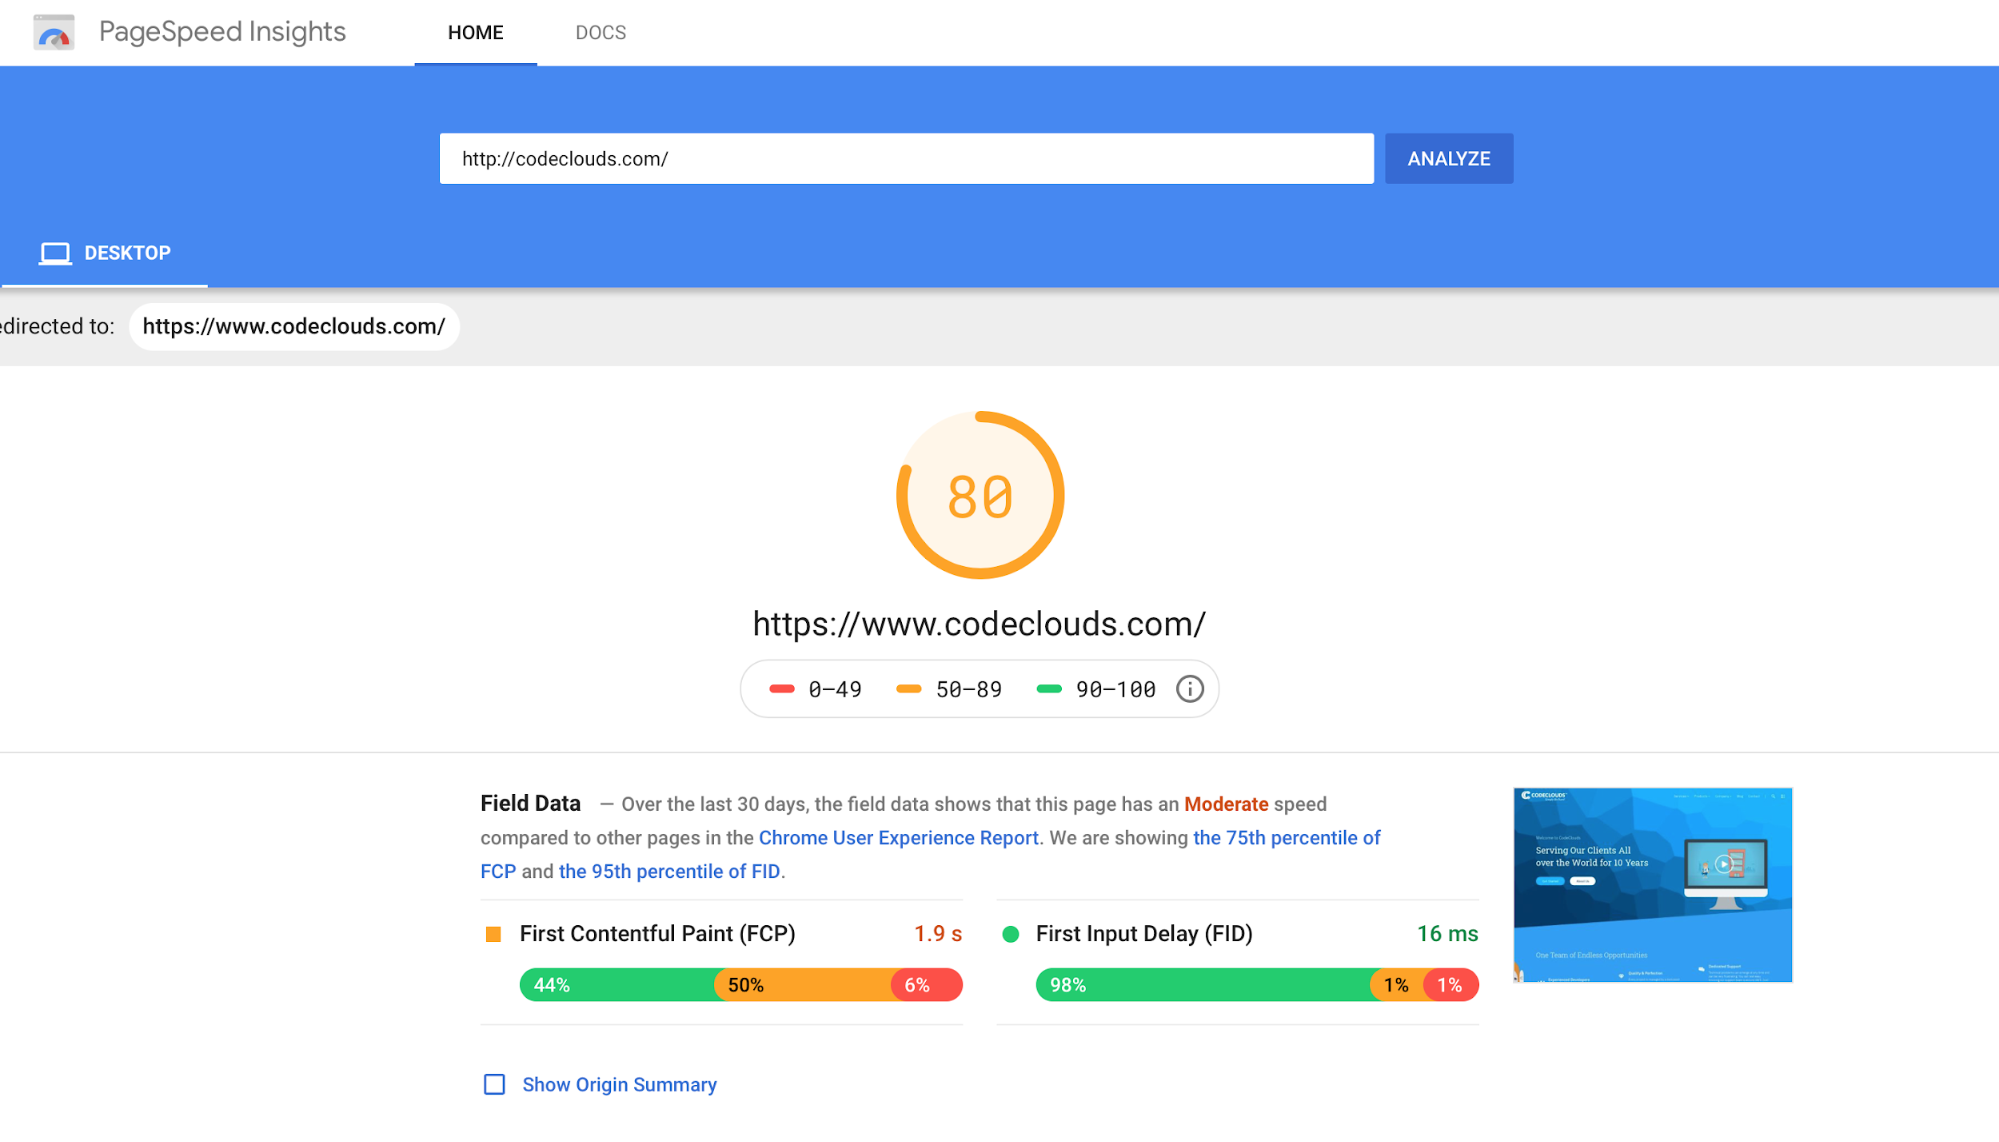 Google PageSpeed Insights Versus GTmetrix